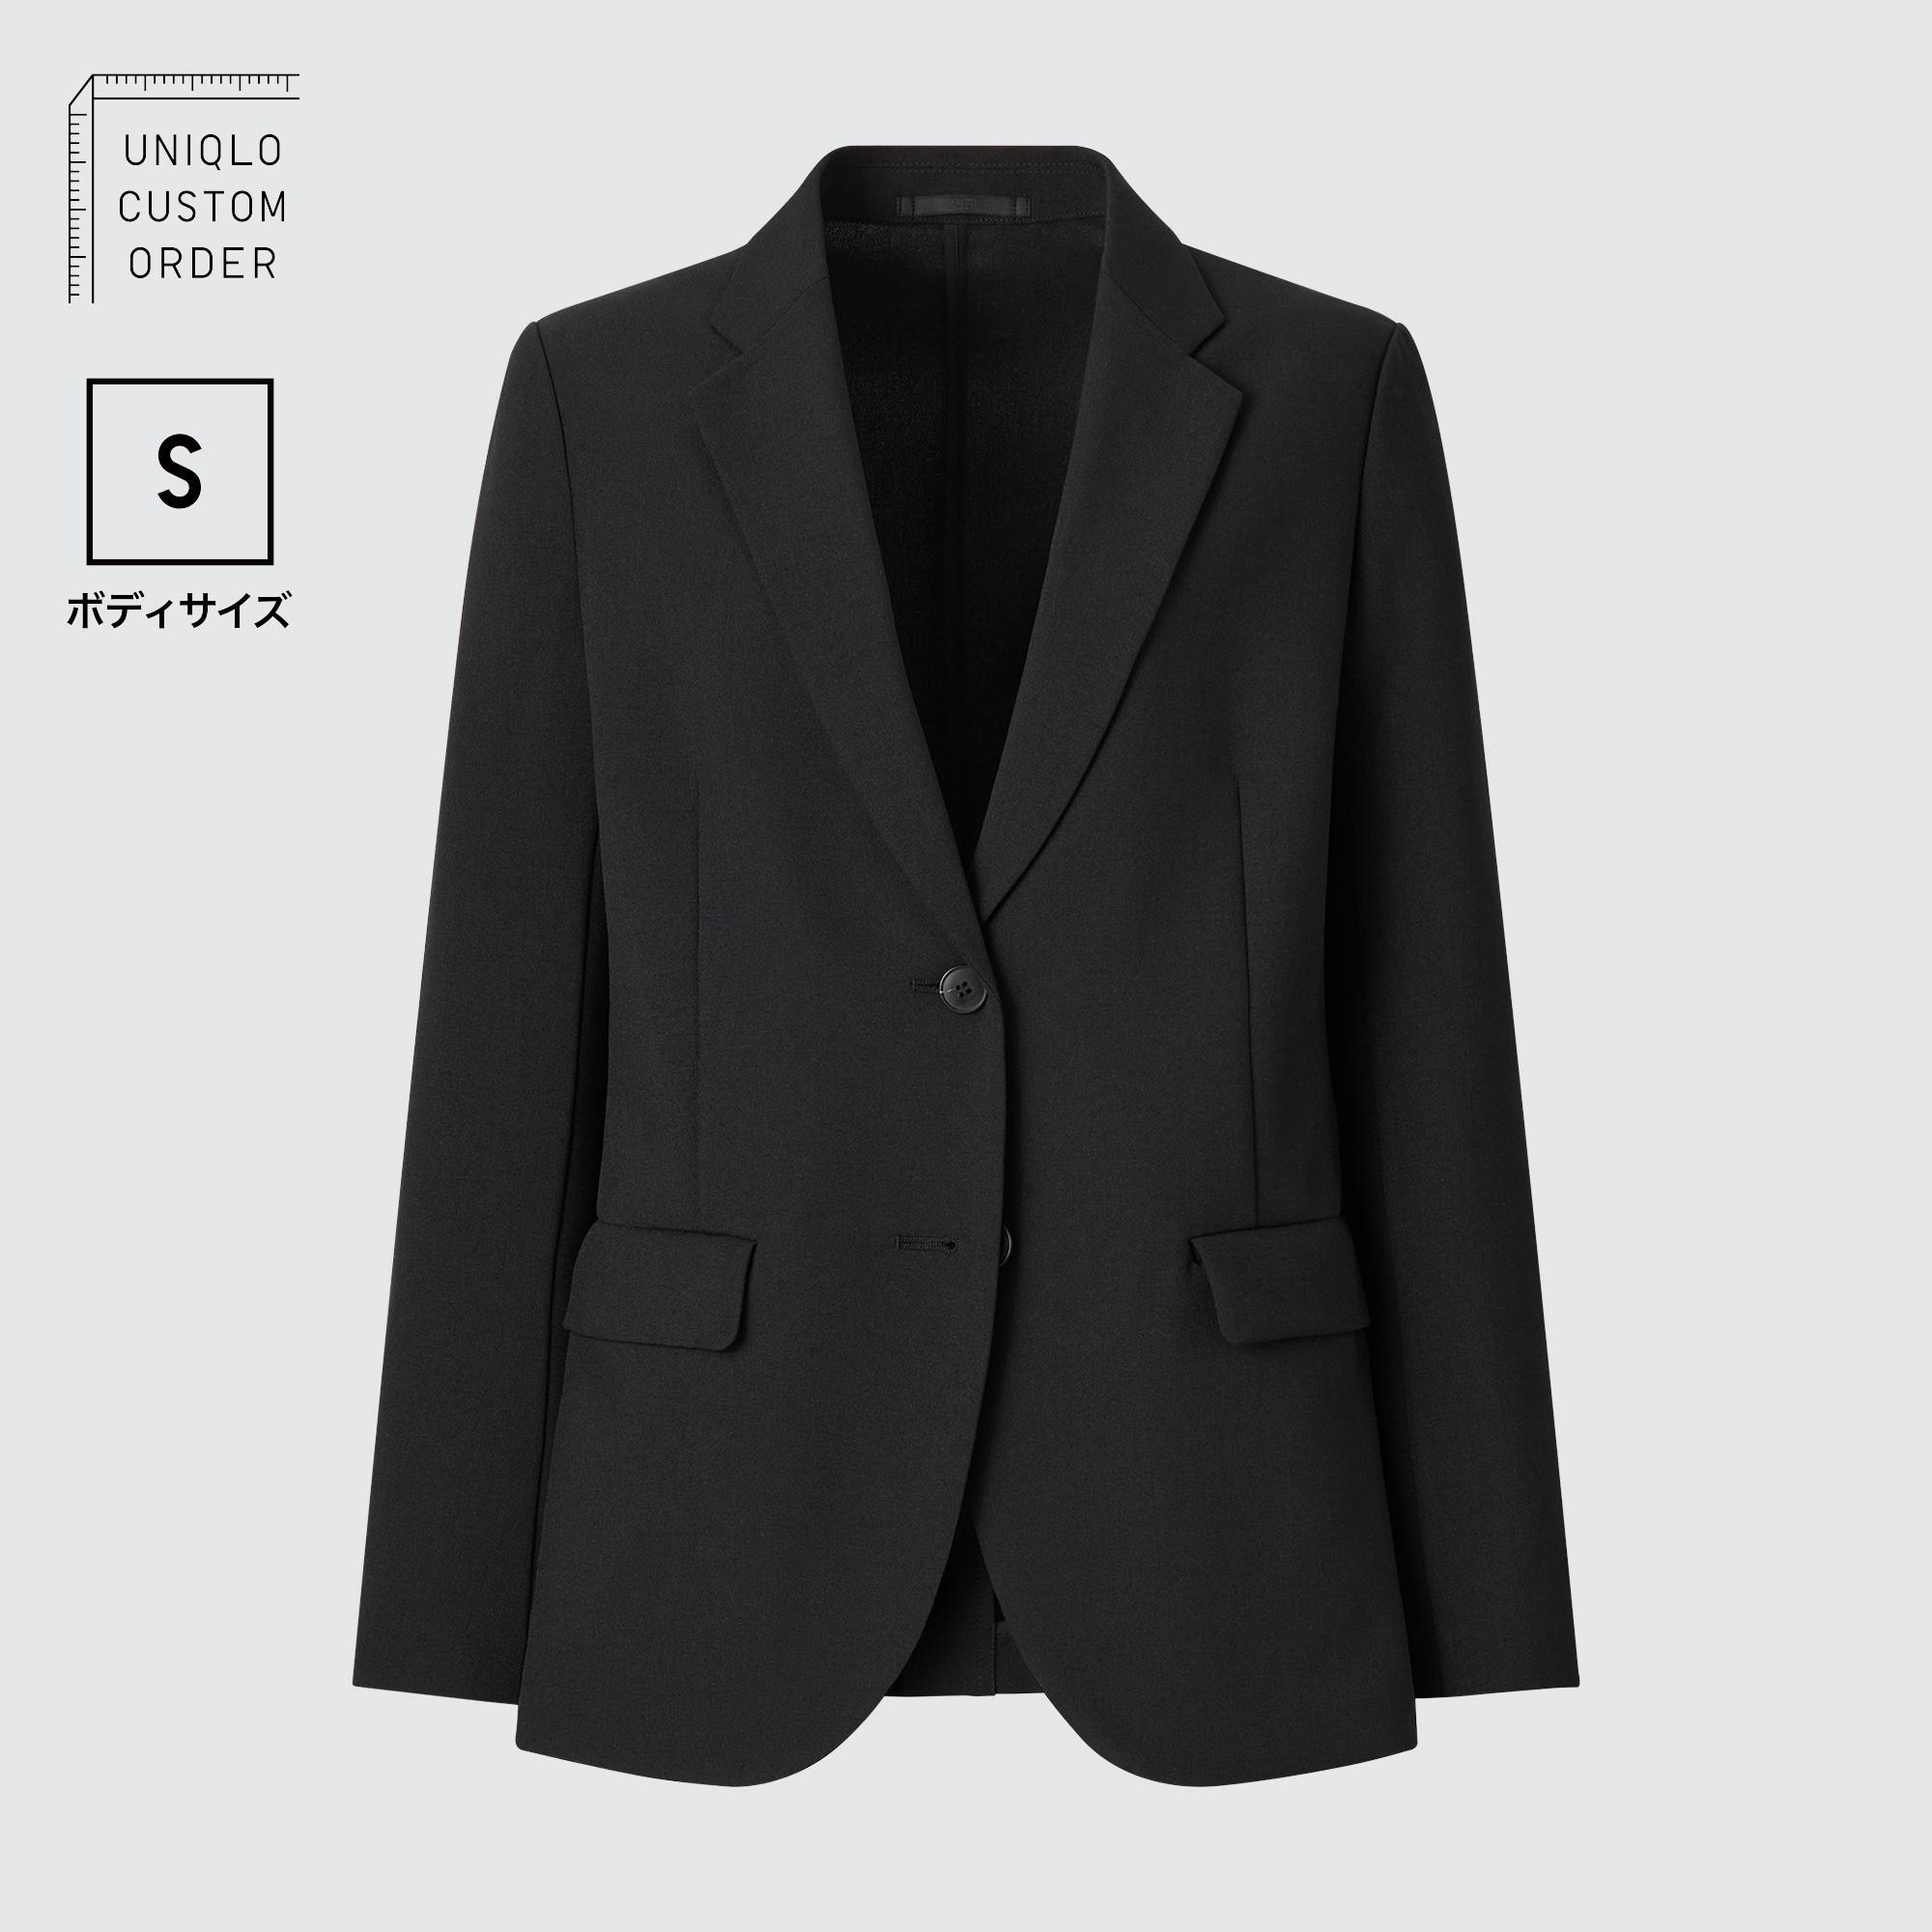 Куртка UNIQLO Кандо размер S, черный цена и фото